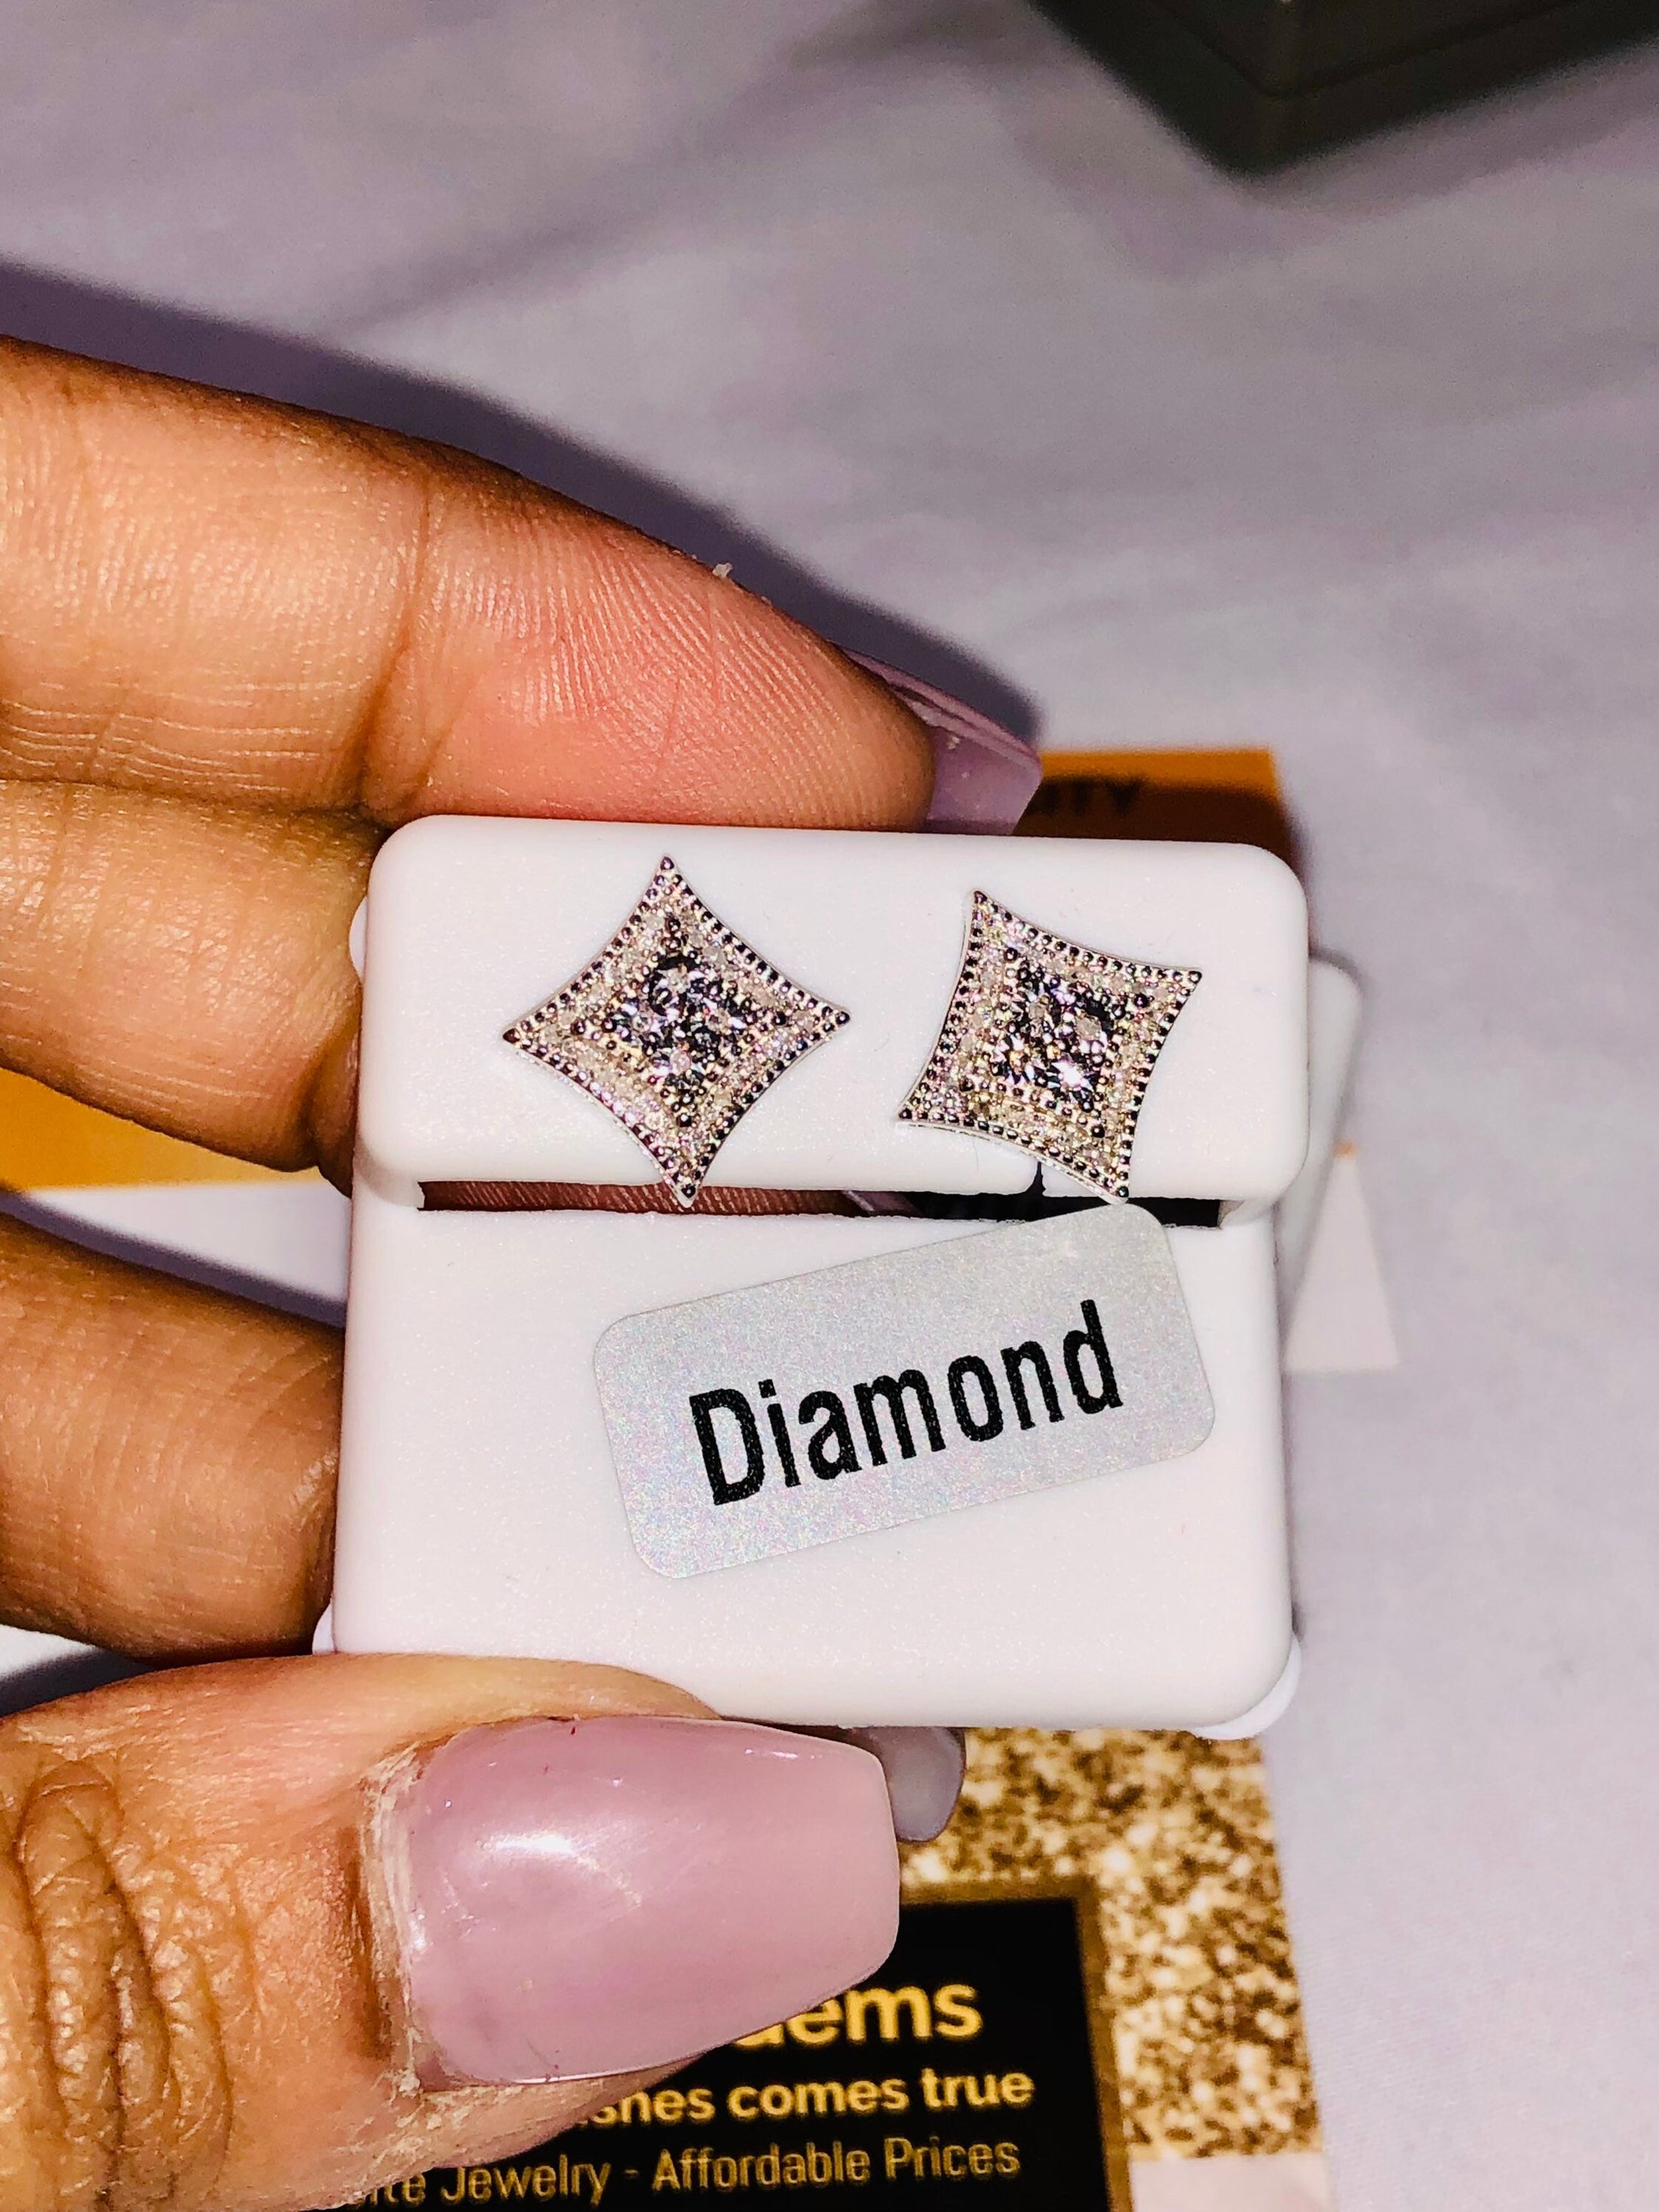 10k yellow gold vermeil beautiful custom designed real diamond earrings, Not CZ not lab made, 100% natural genuine diamond earrings, unisex,